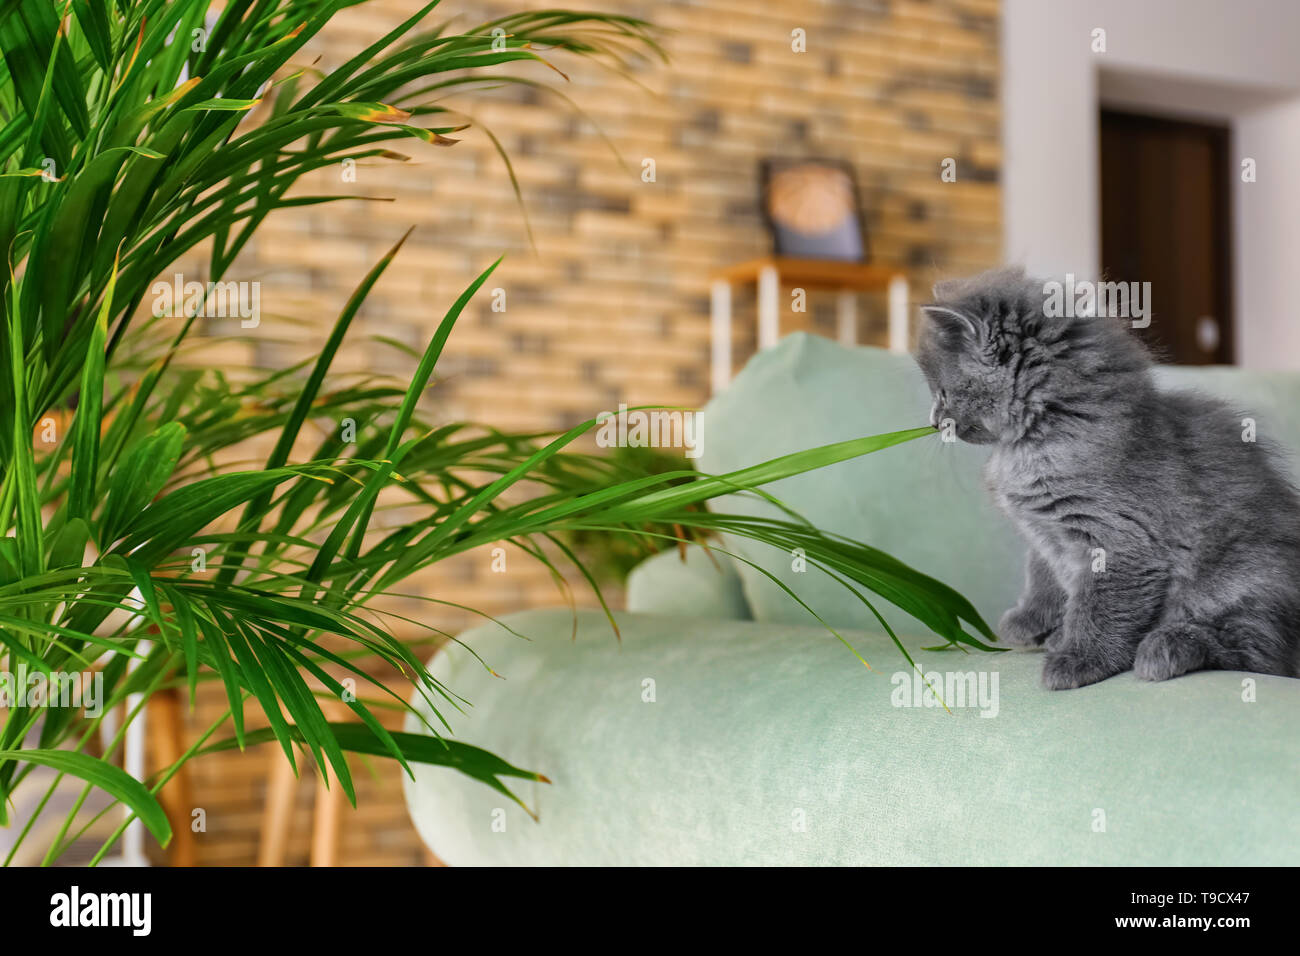 Cute little kitten near Areca palm at home Stock Photo